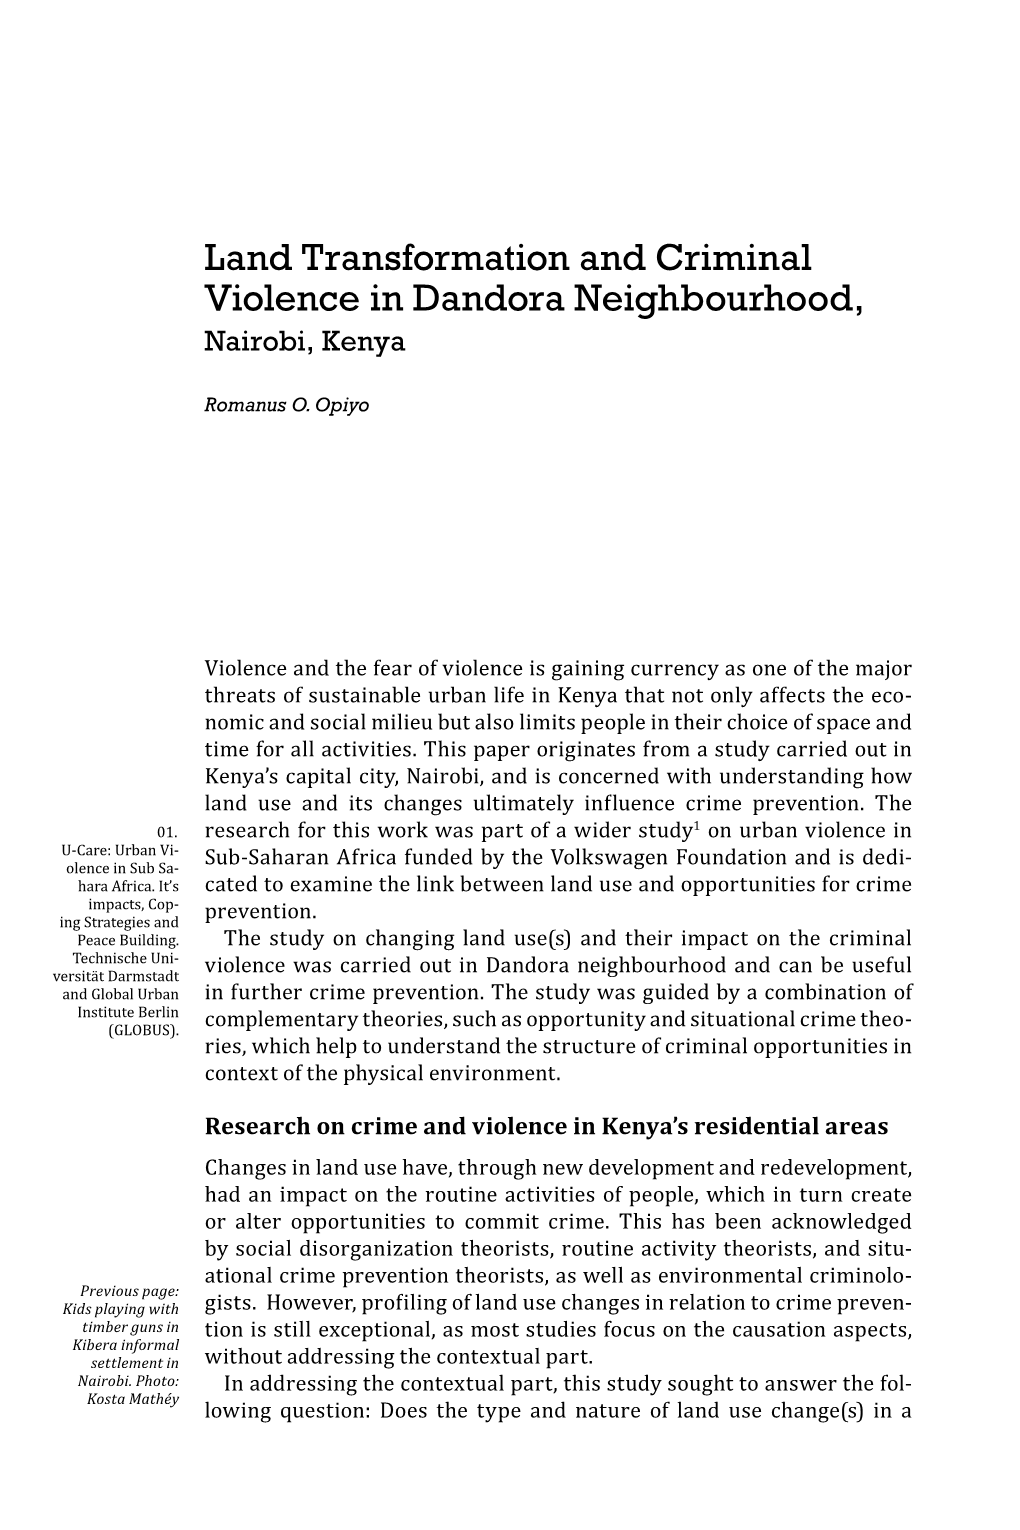 Land Transformation and Criminal Violence in Dandora Neighbourhood, Nairobi, Kenya